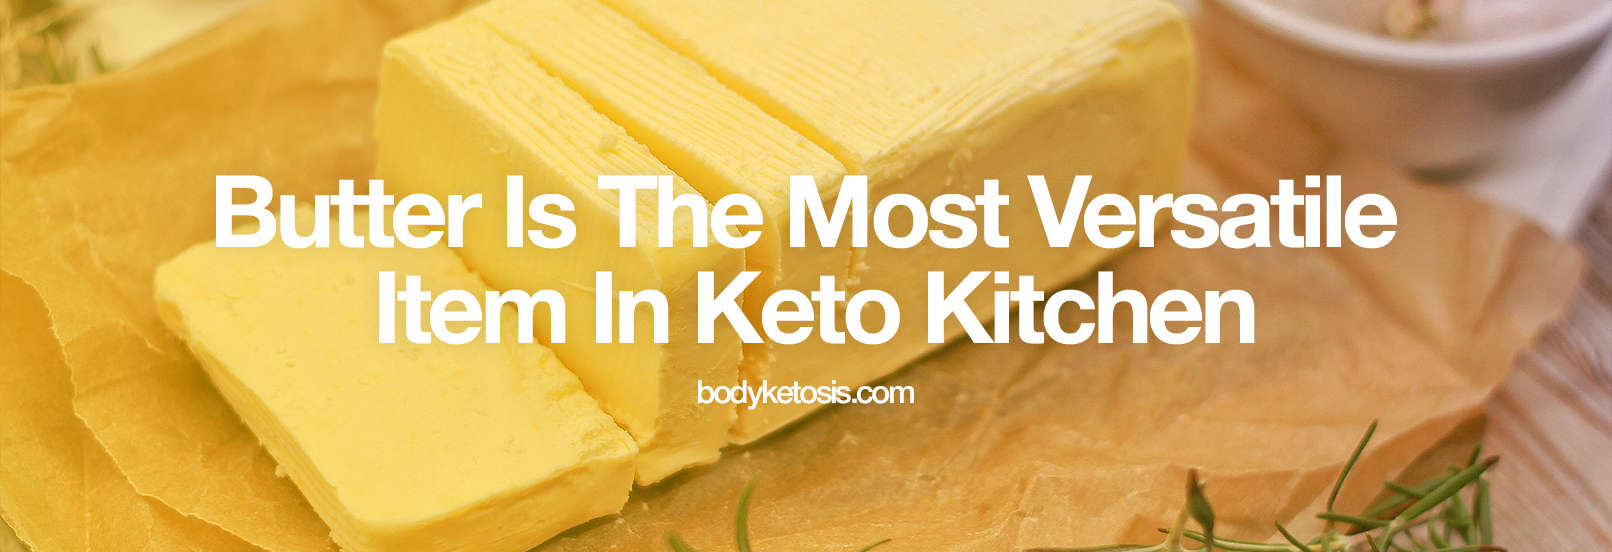 get more fat keto butter